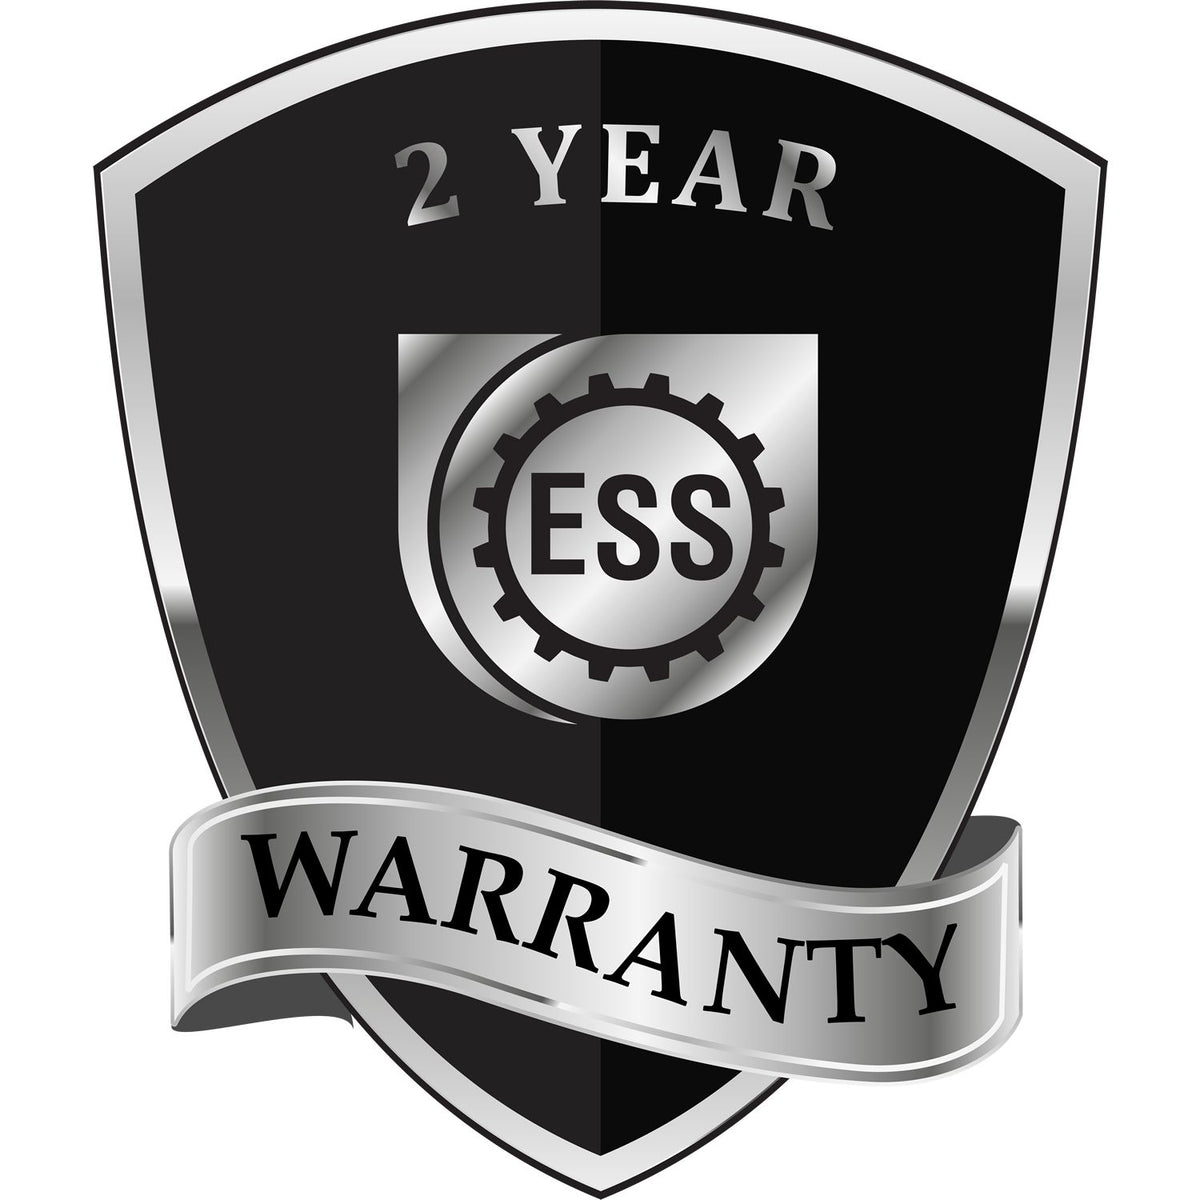 A black and silver badge or emblem showing warranty information for the Hybrid Minnesota Landscape Architect Seal